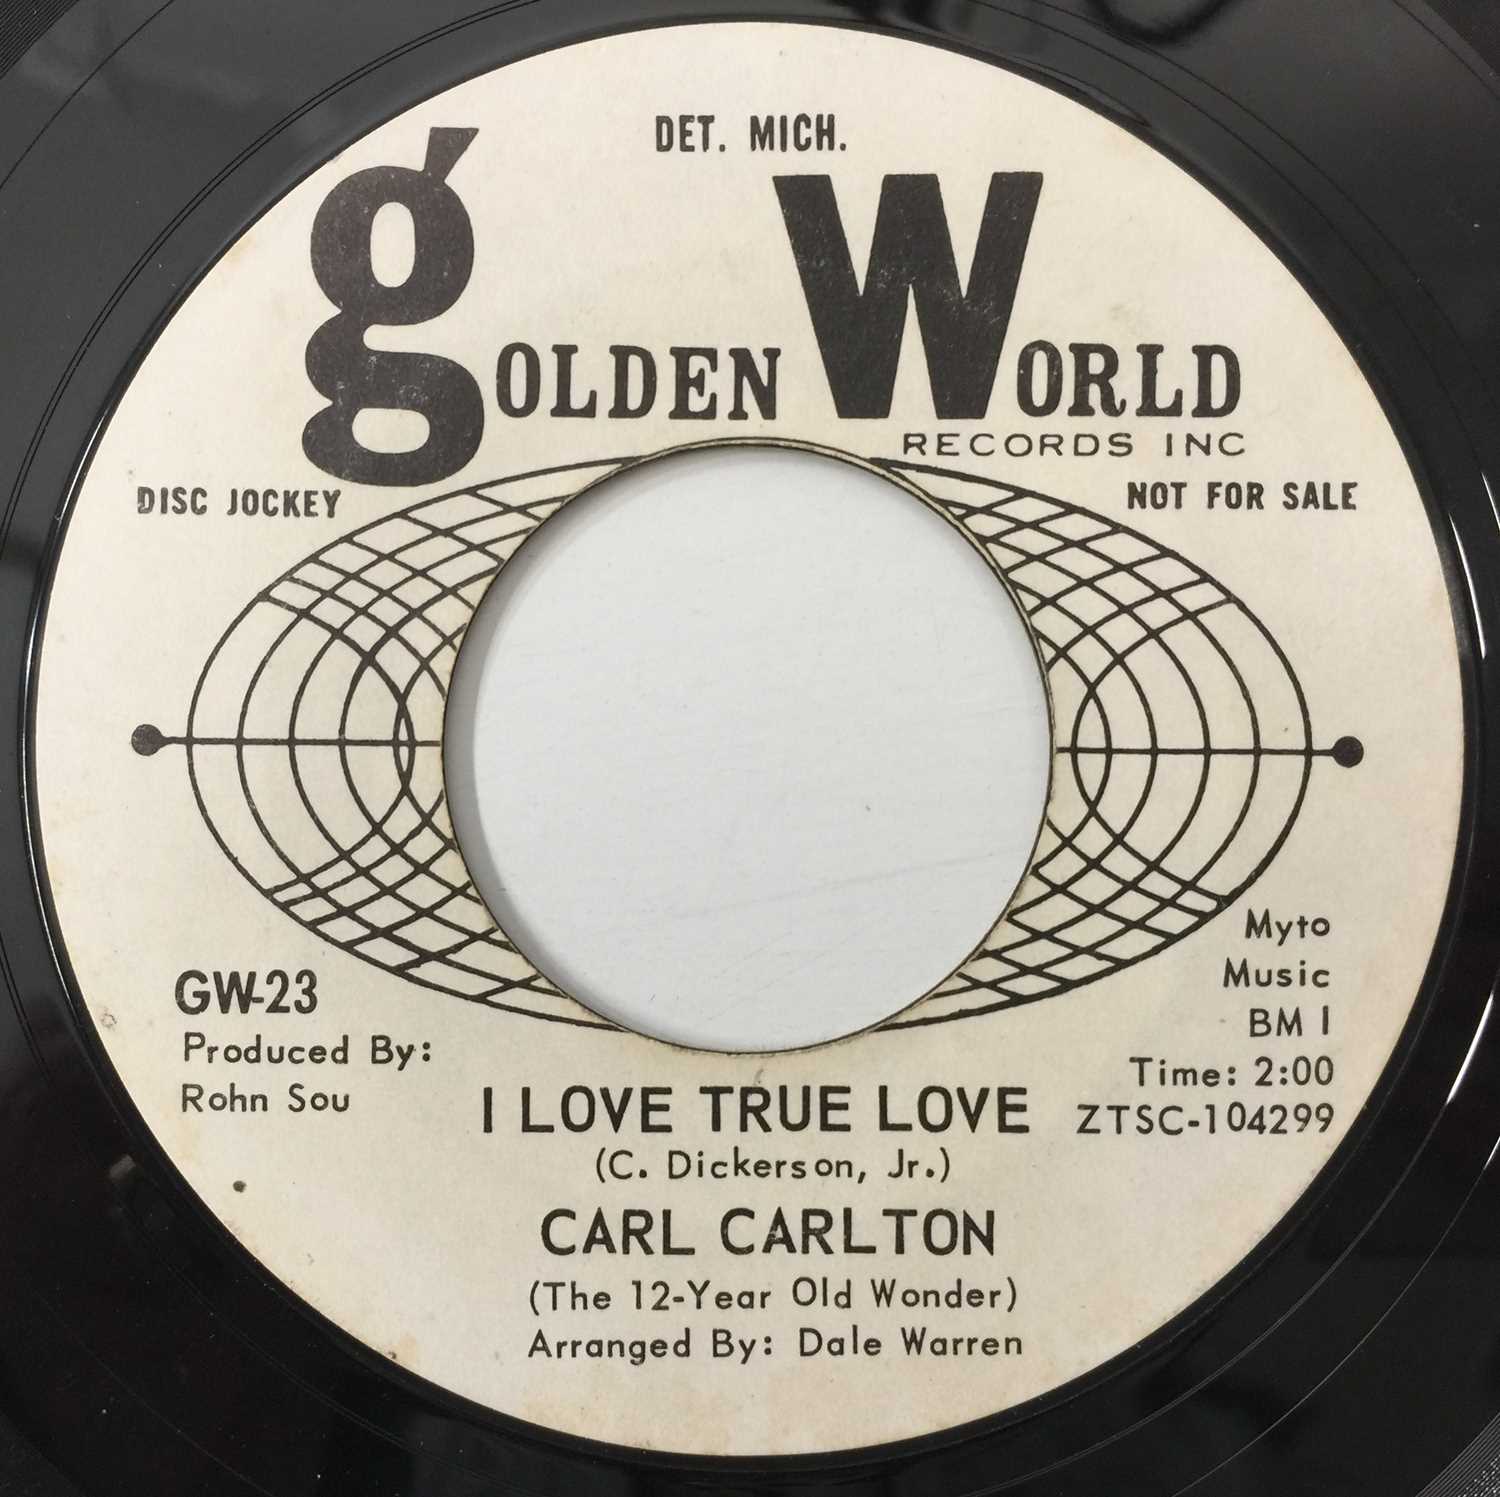 CARL CARLTON - NOTHIN' NO SWEETER THAN LOVE 7" (US PROMO - GOLDEN WORLD - GW-23) - Image 2 of 2